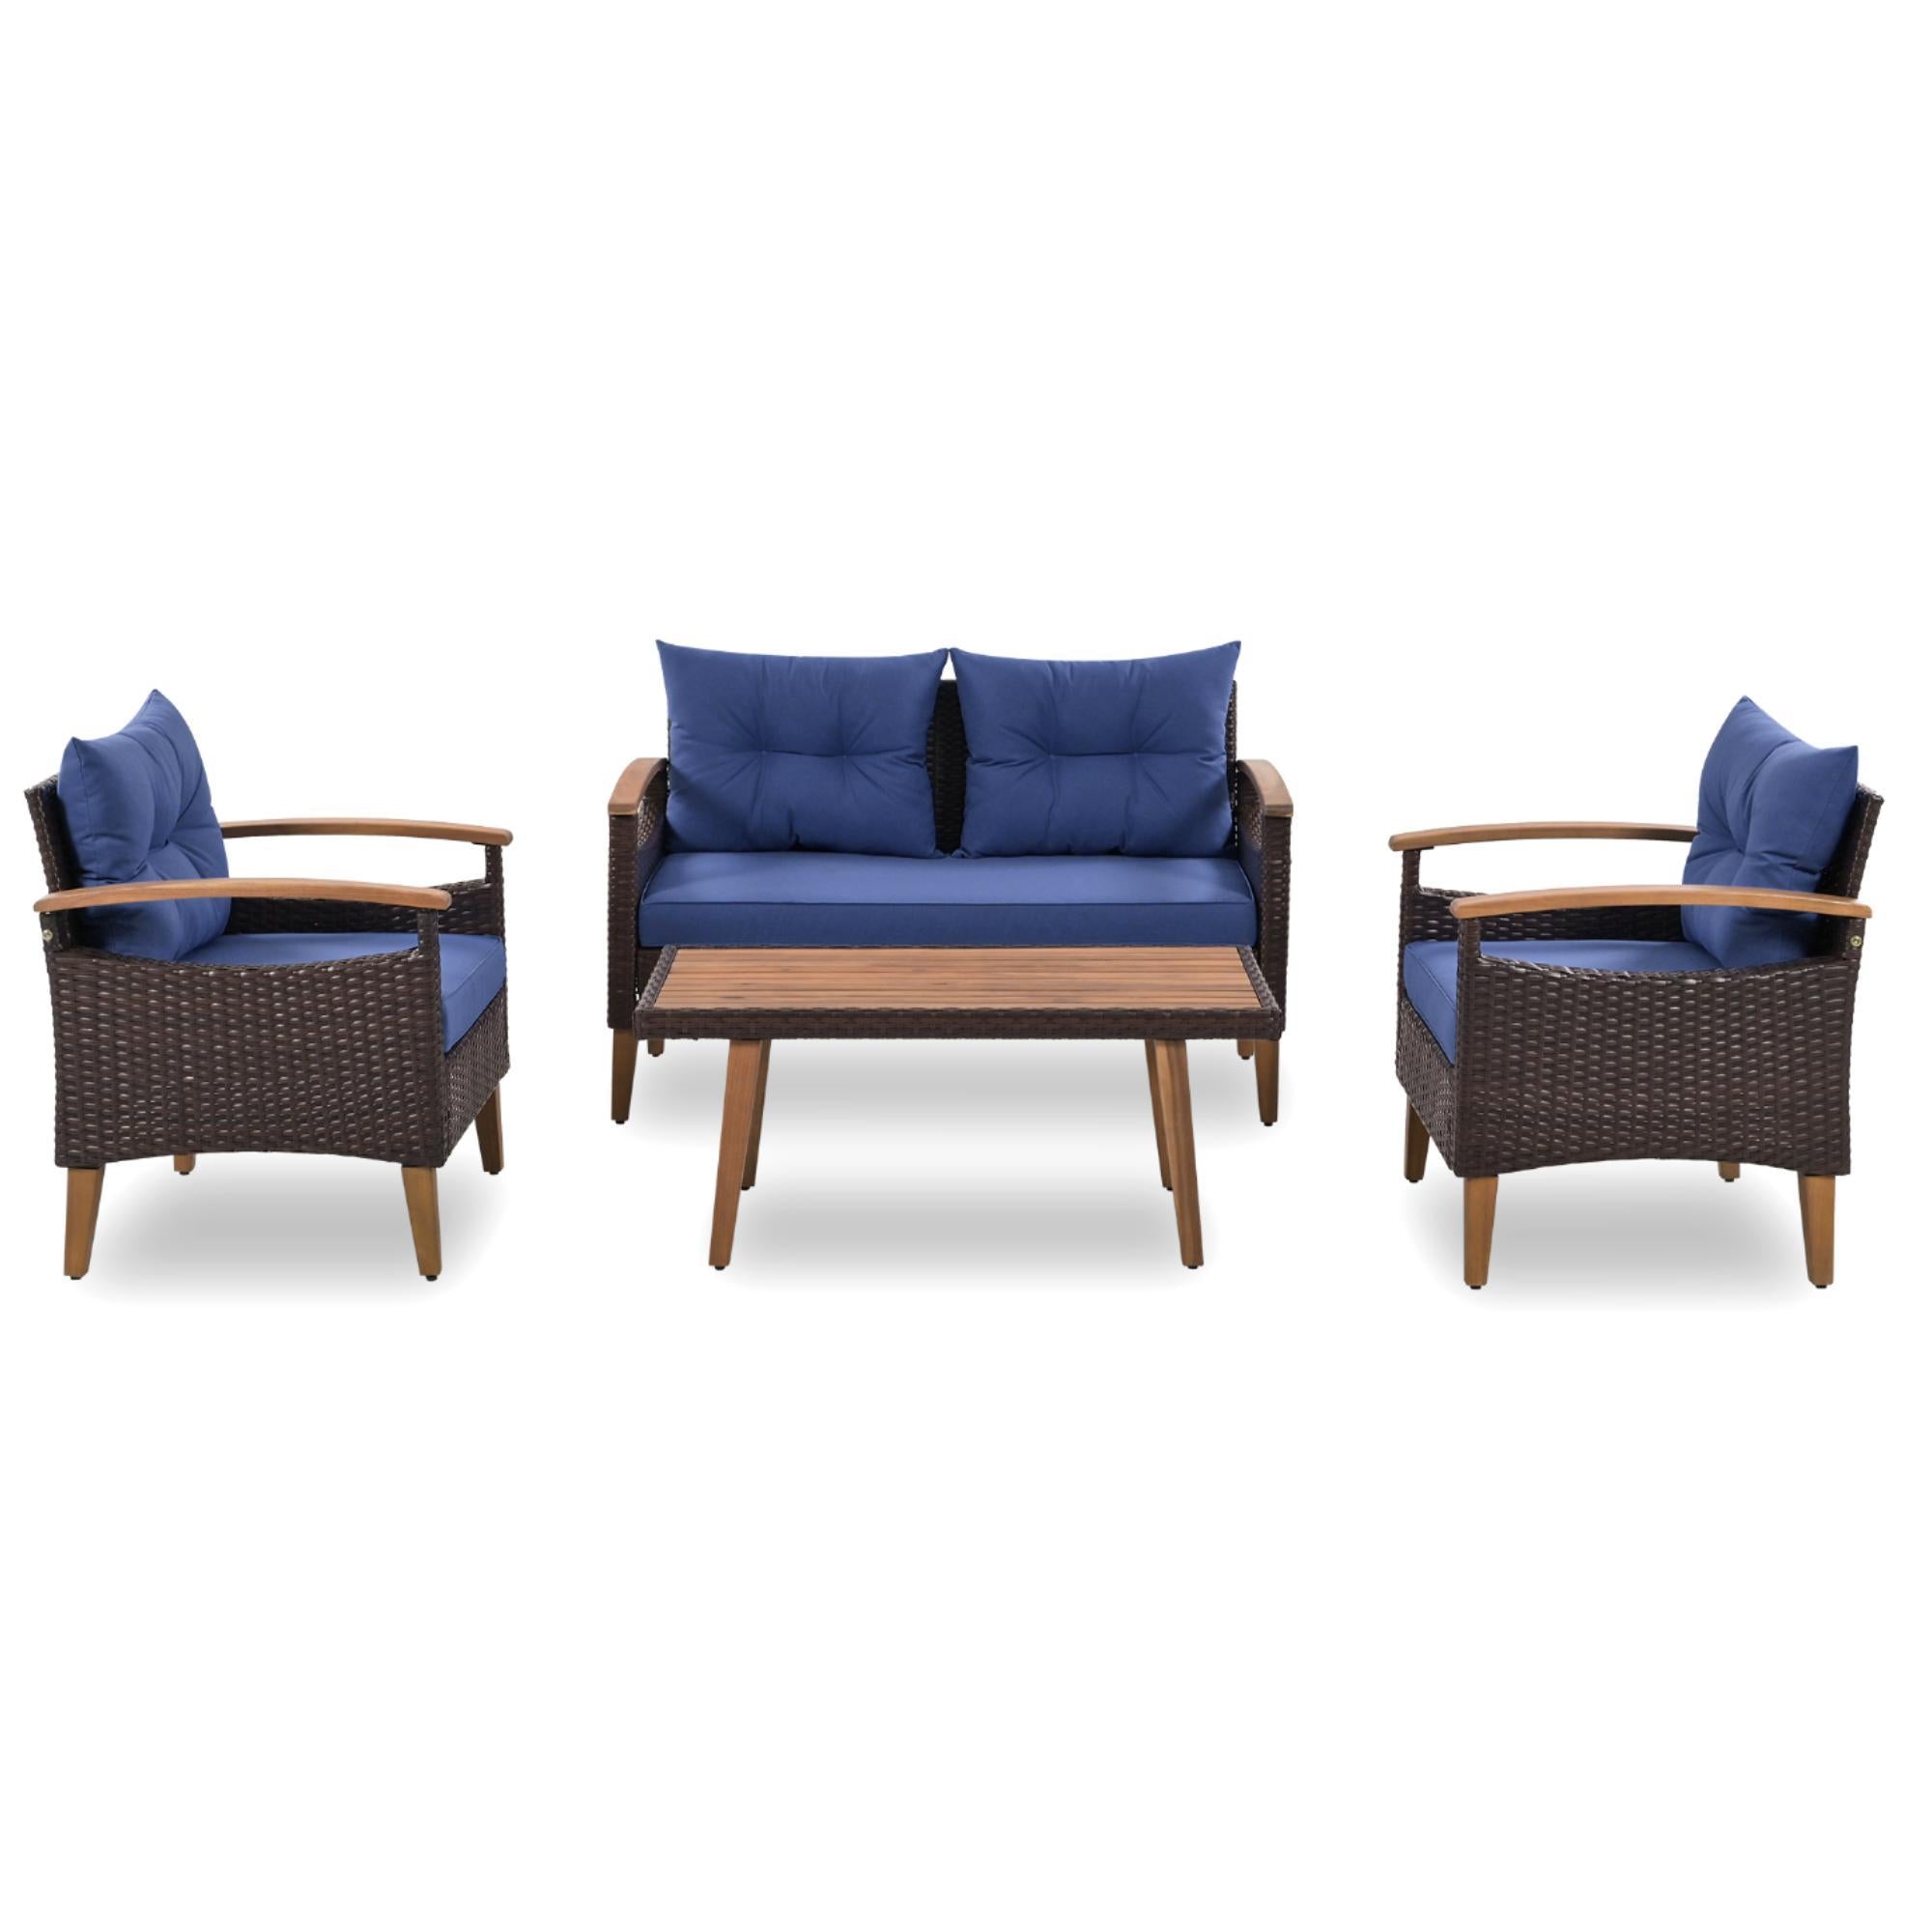 4 Piece Garden Furniture, Patio Seating Set, PE yes-blue-wicker